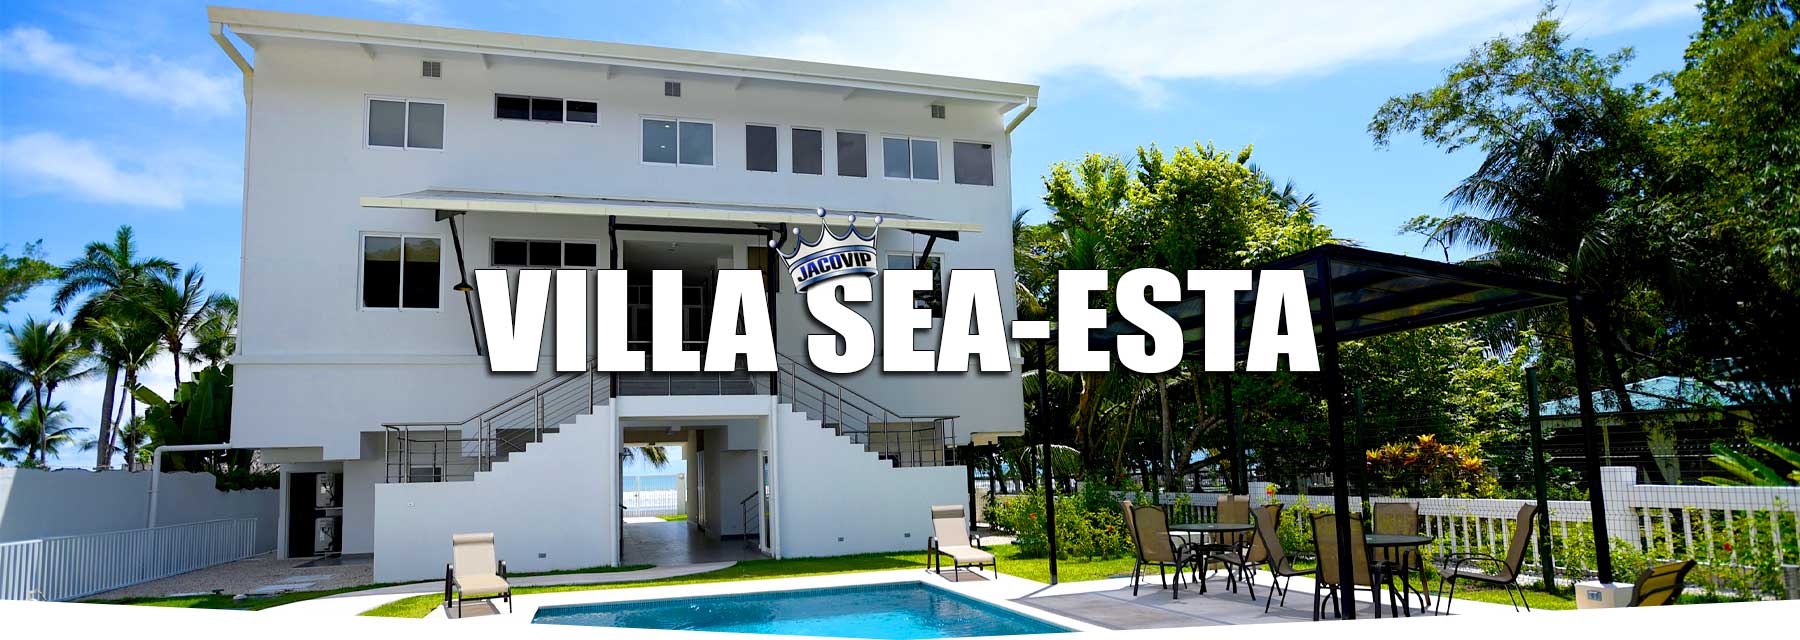 Villa Sea-Esta Jaco beachfront vacation rental villa in Costa Rica